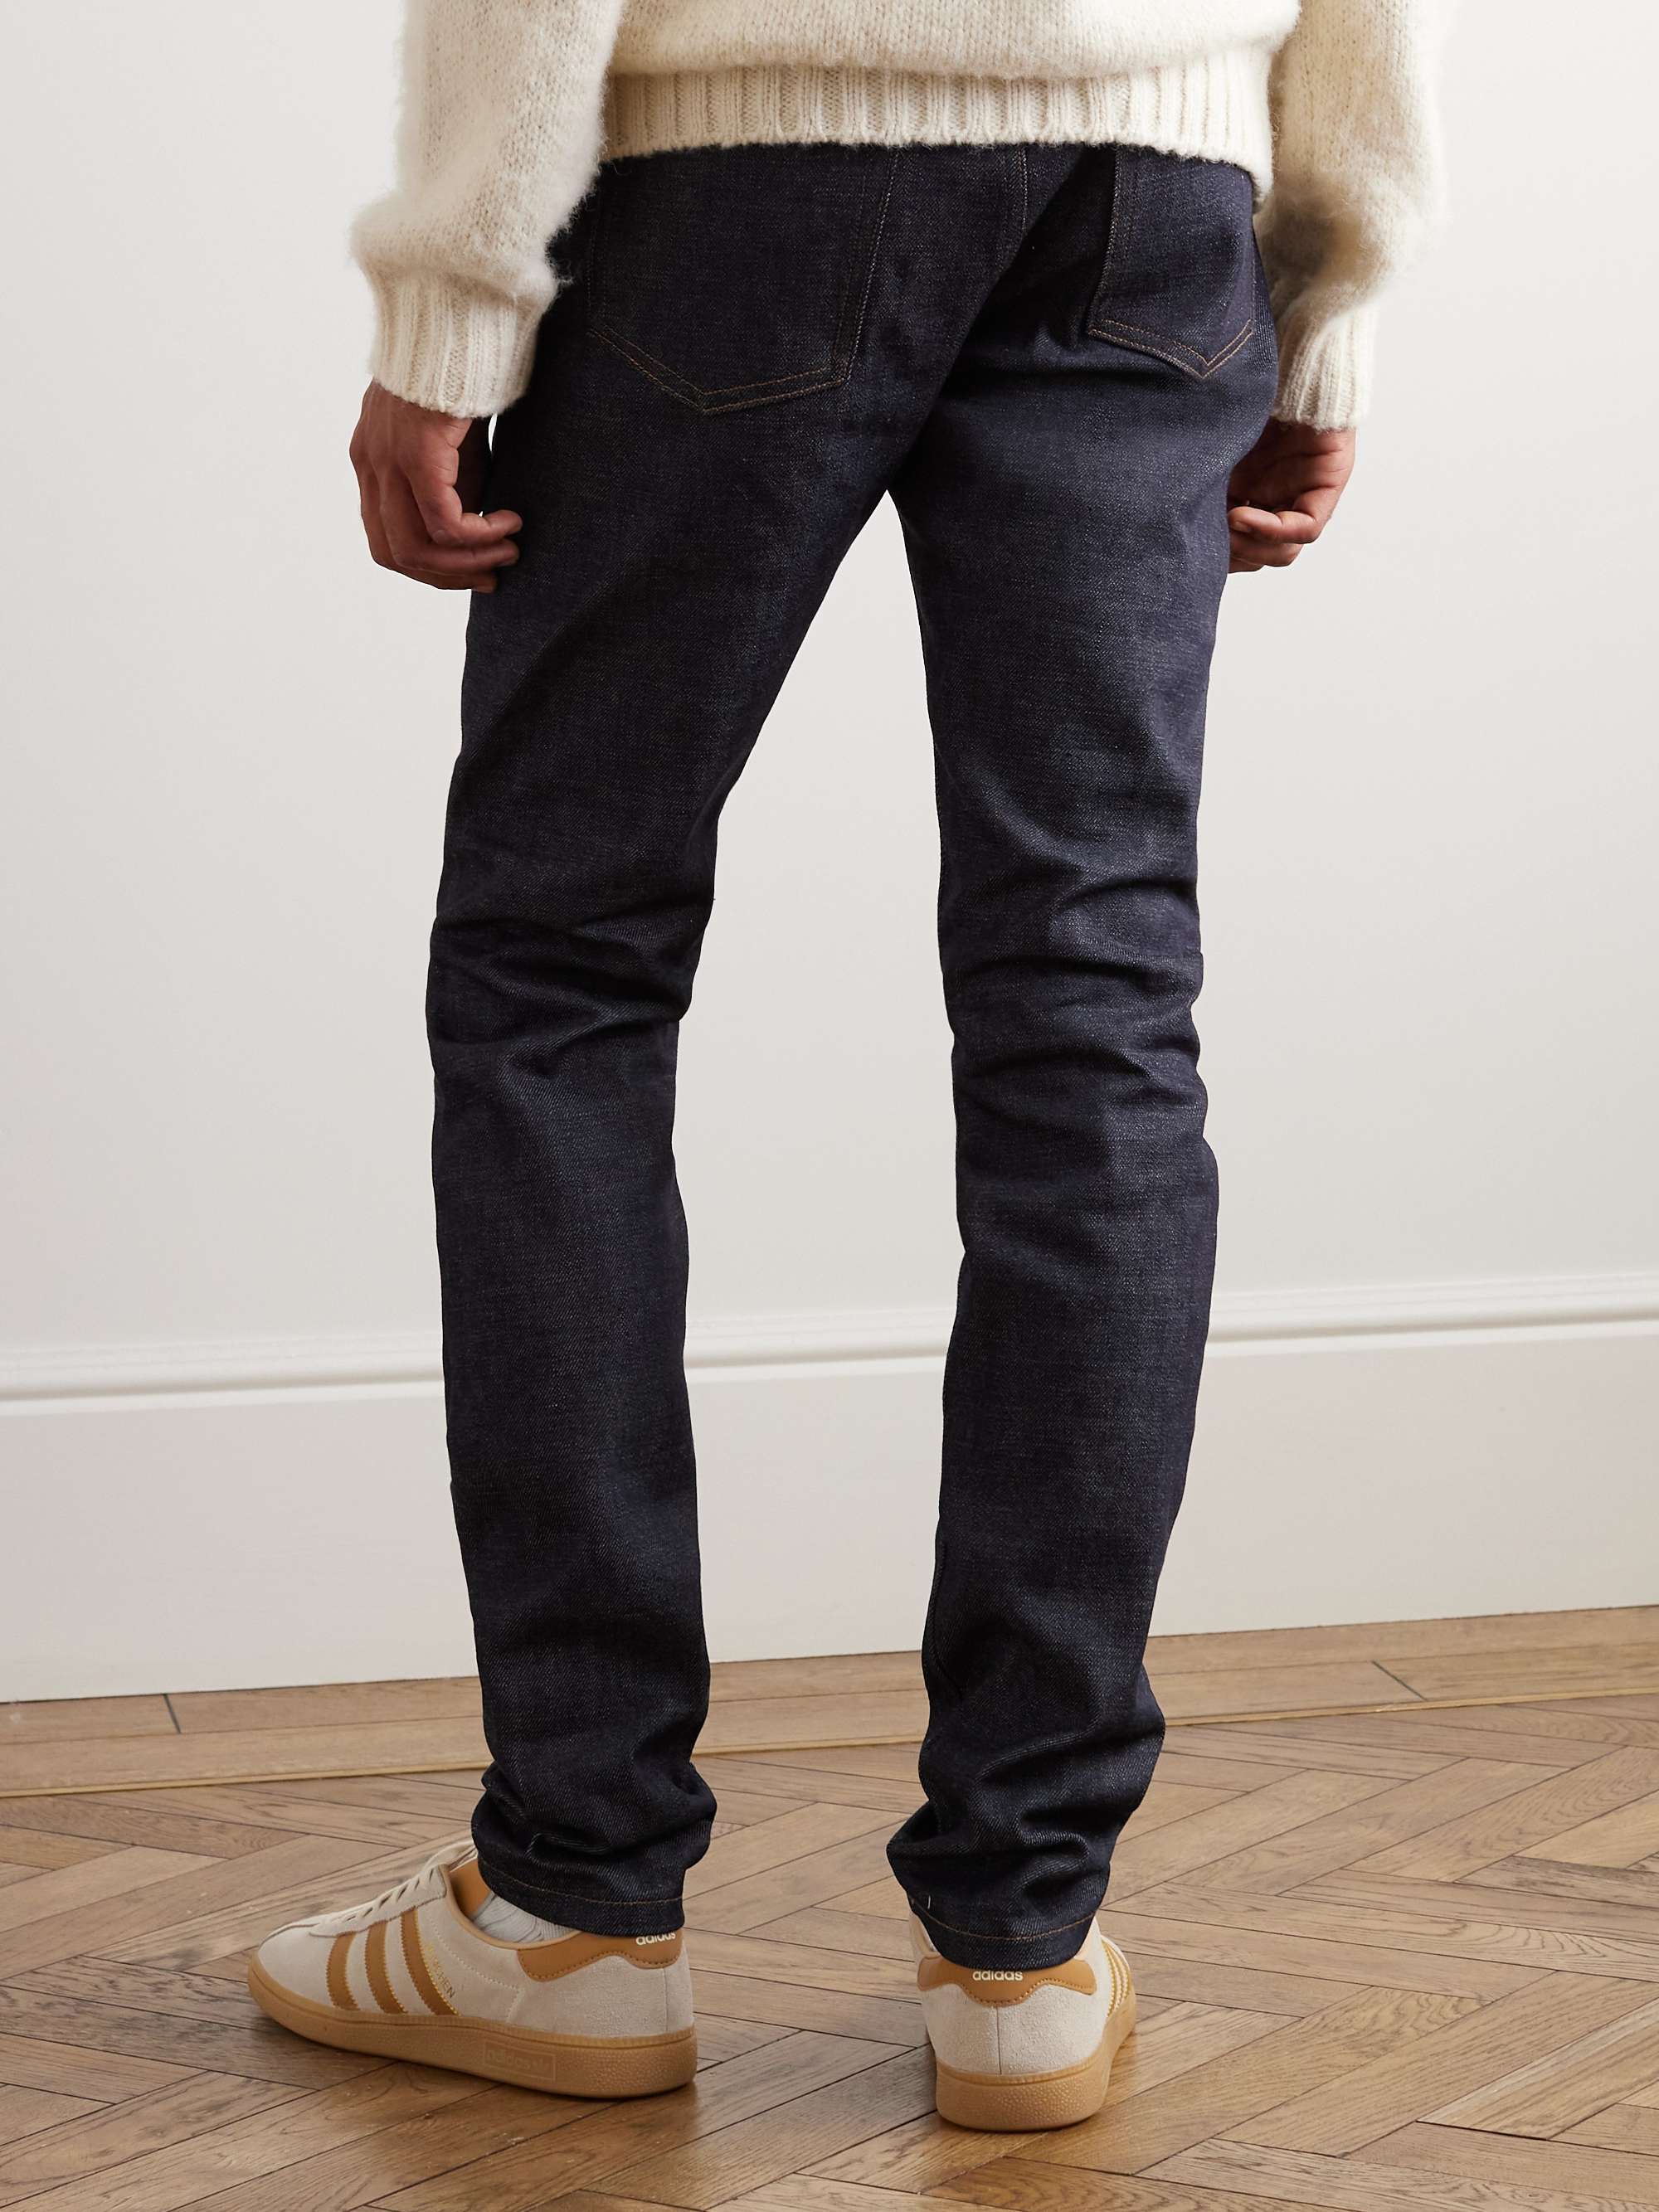 A.P.C. Petit New Standard Skinny-Fit Dry Selvedge Denim Jeans